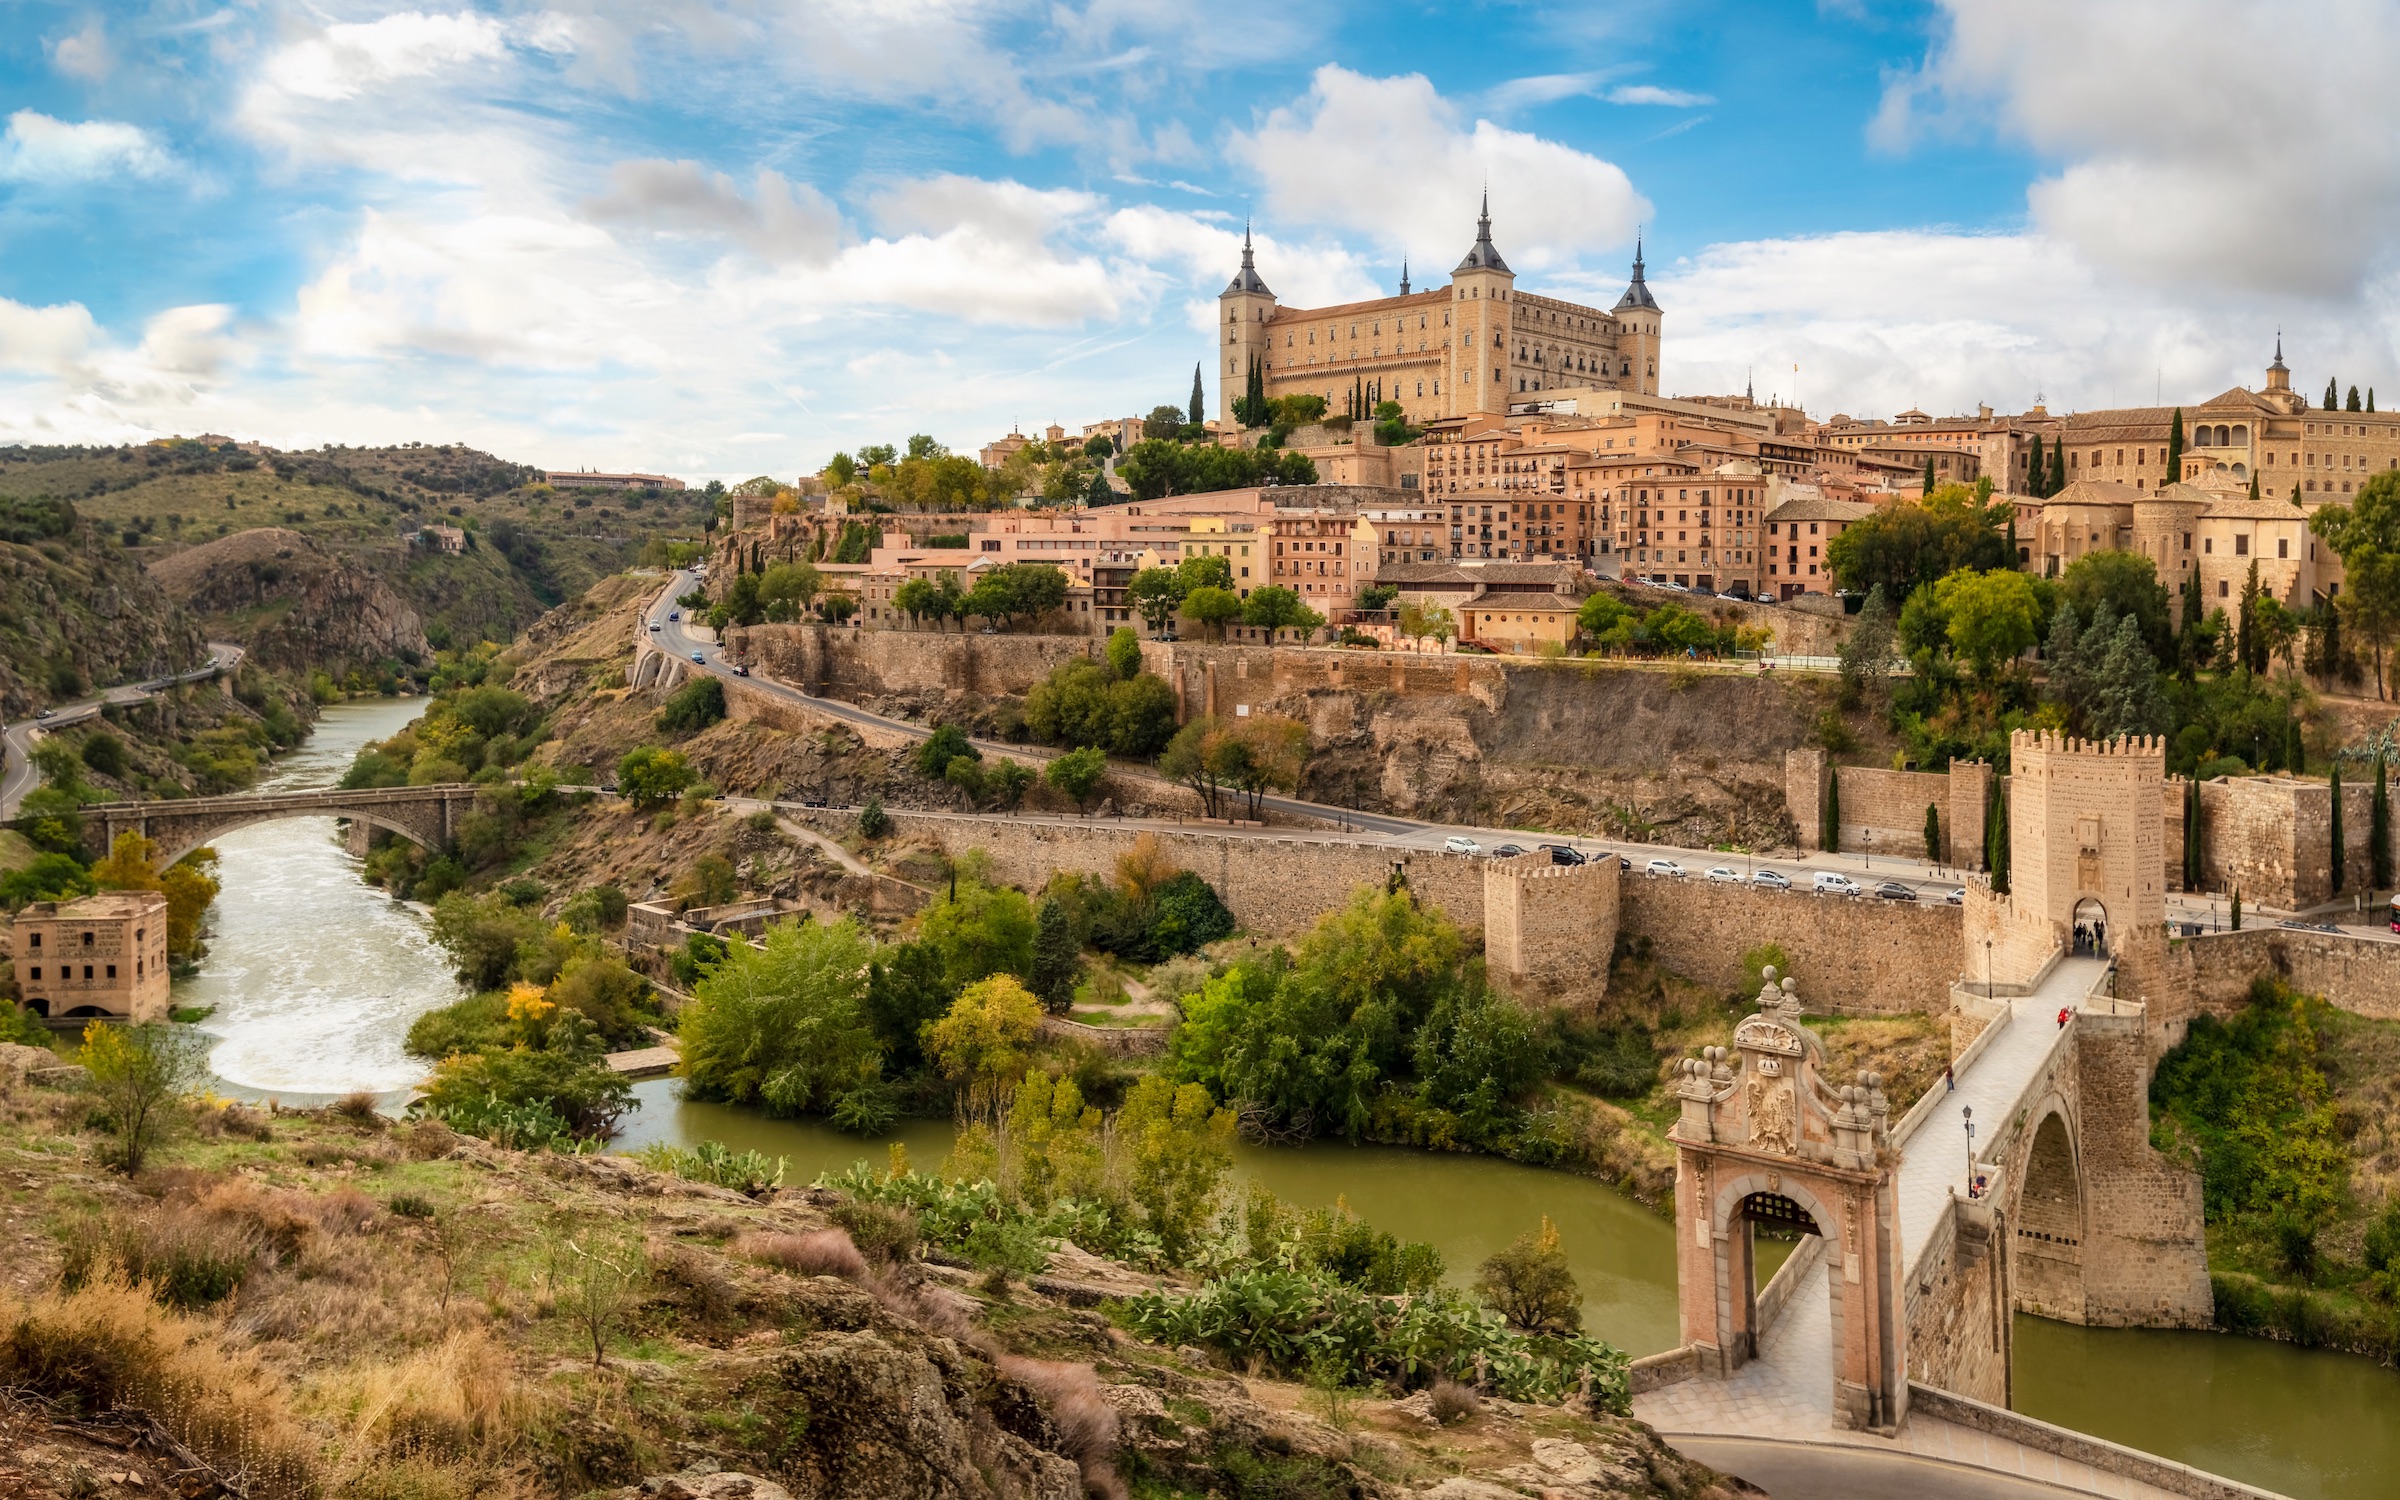 Spain History Tour - Travel to La Mancha, Toledo, Segovia, Salamanca, and Madrid